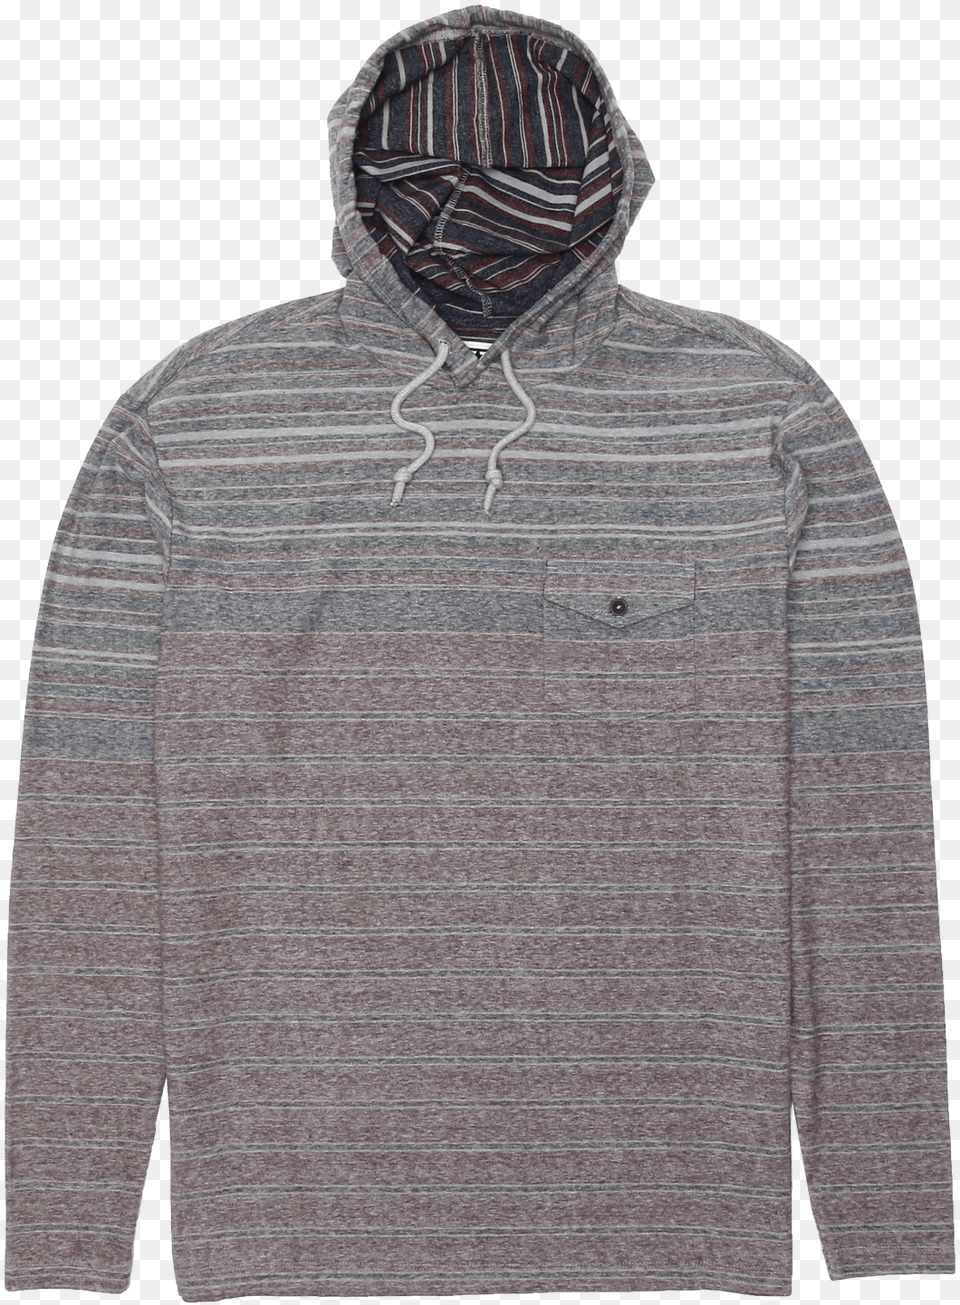 Hoodie, Clothing, Knitwear, Sweater, Sweatshirt Free Transparent Png